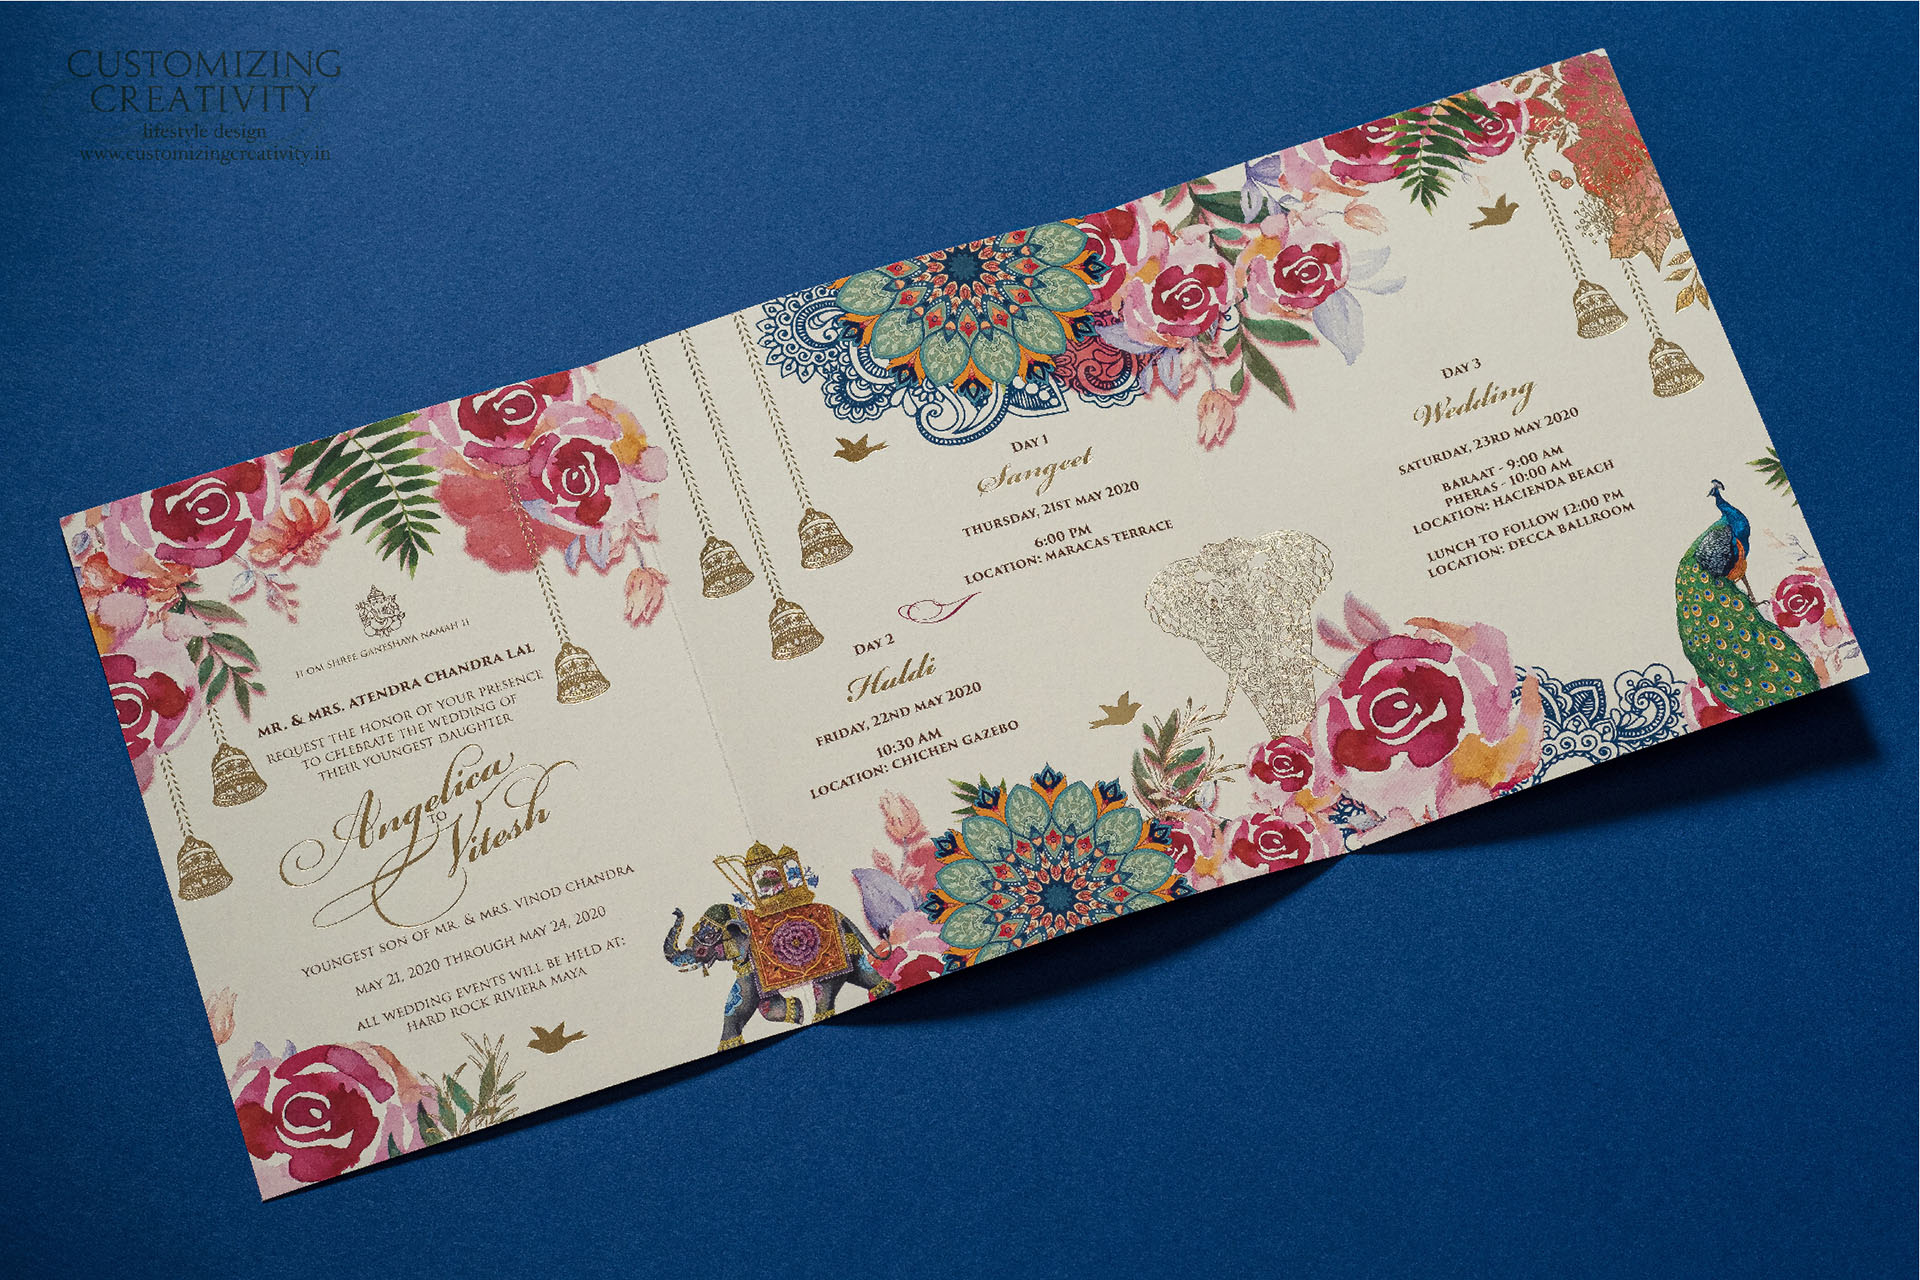 hindu wedding invitation cards designs